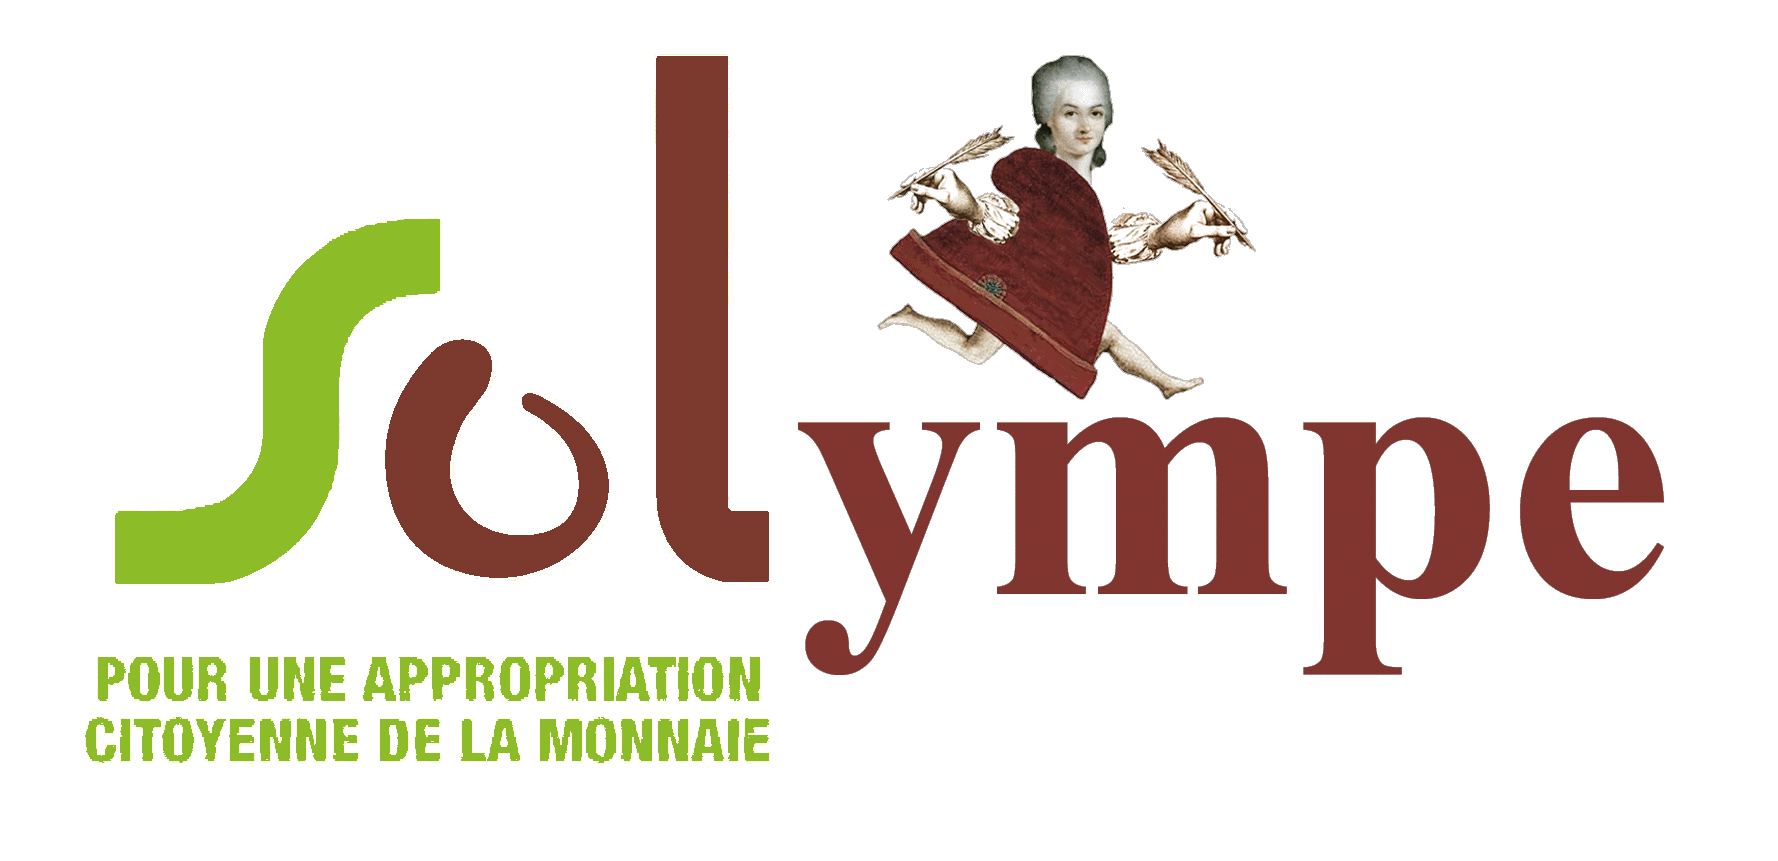 Solympe